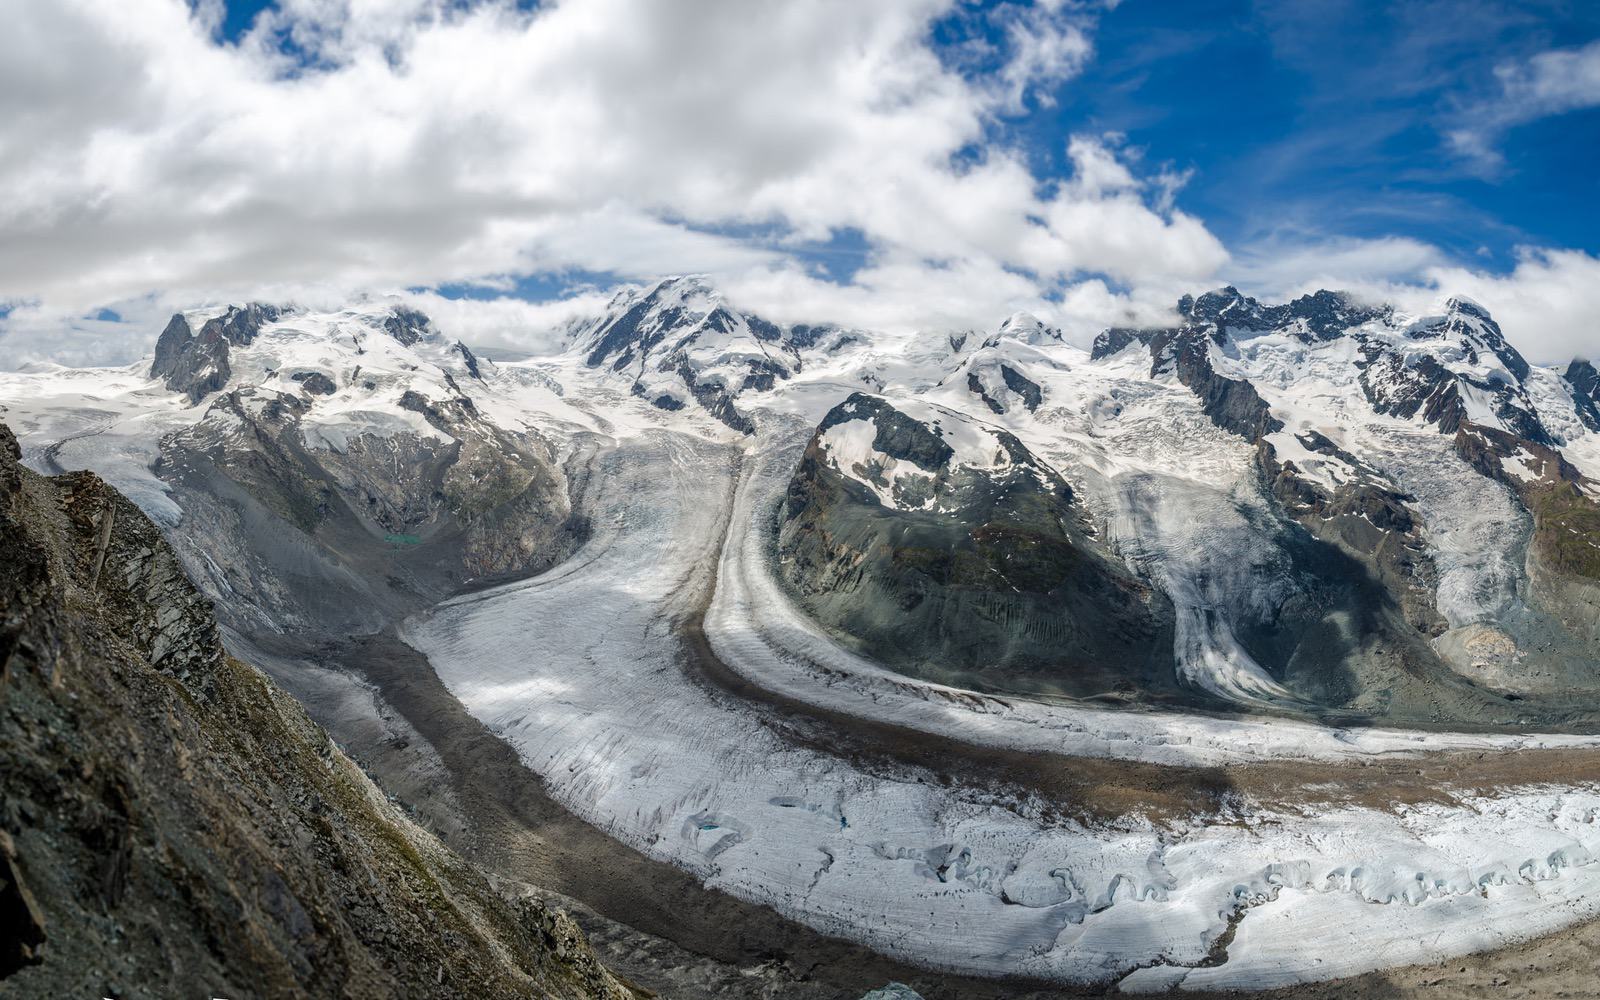 View over Matterhorn from Gorner Glacier